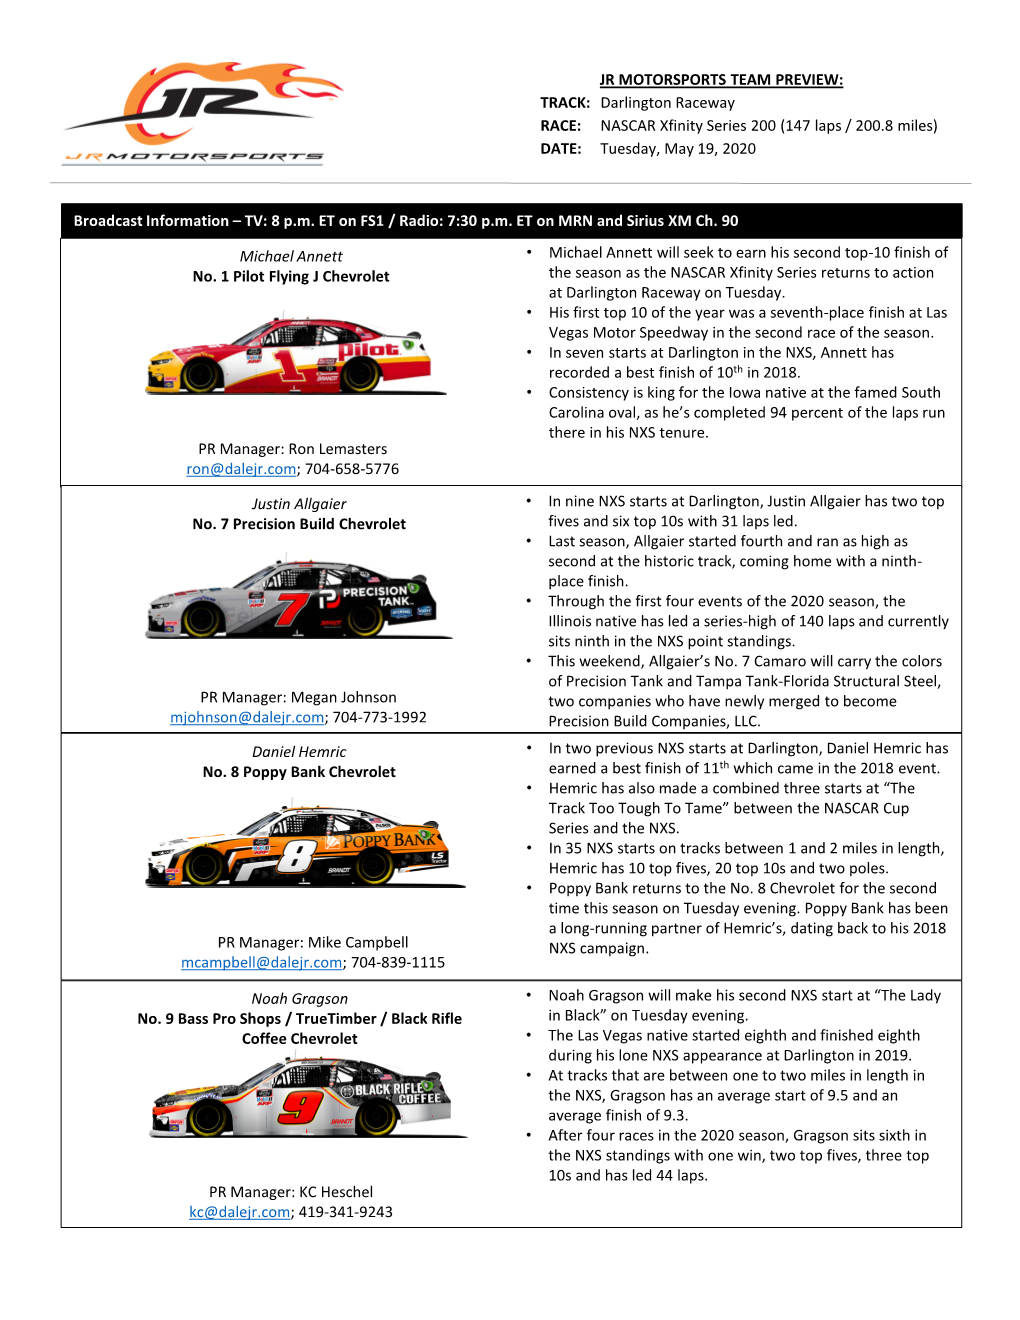 Darlington Raceway RACE: NASCAR Xfinity Series 200 (147 Laps / 200.8 Miles) DATE: Tuesday, May 19, 2020